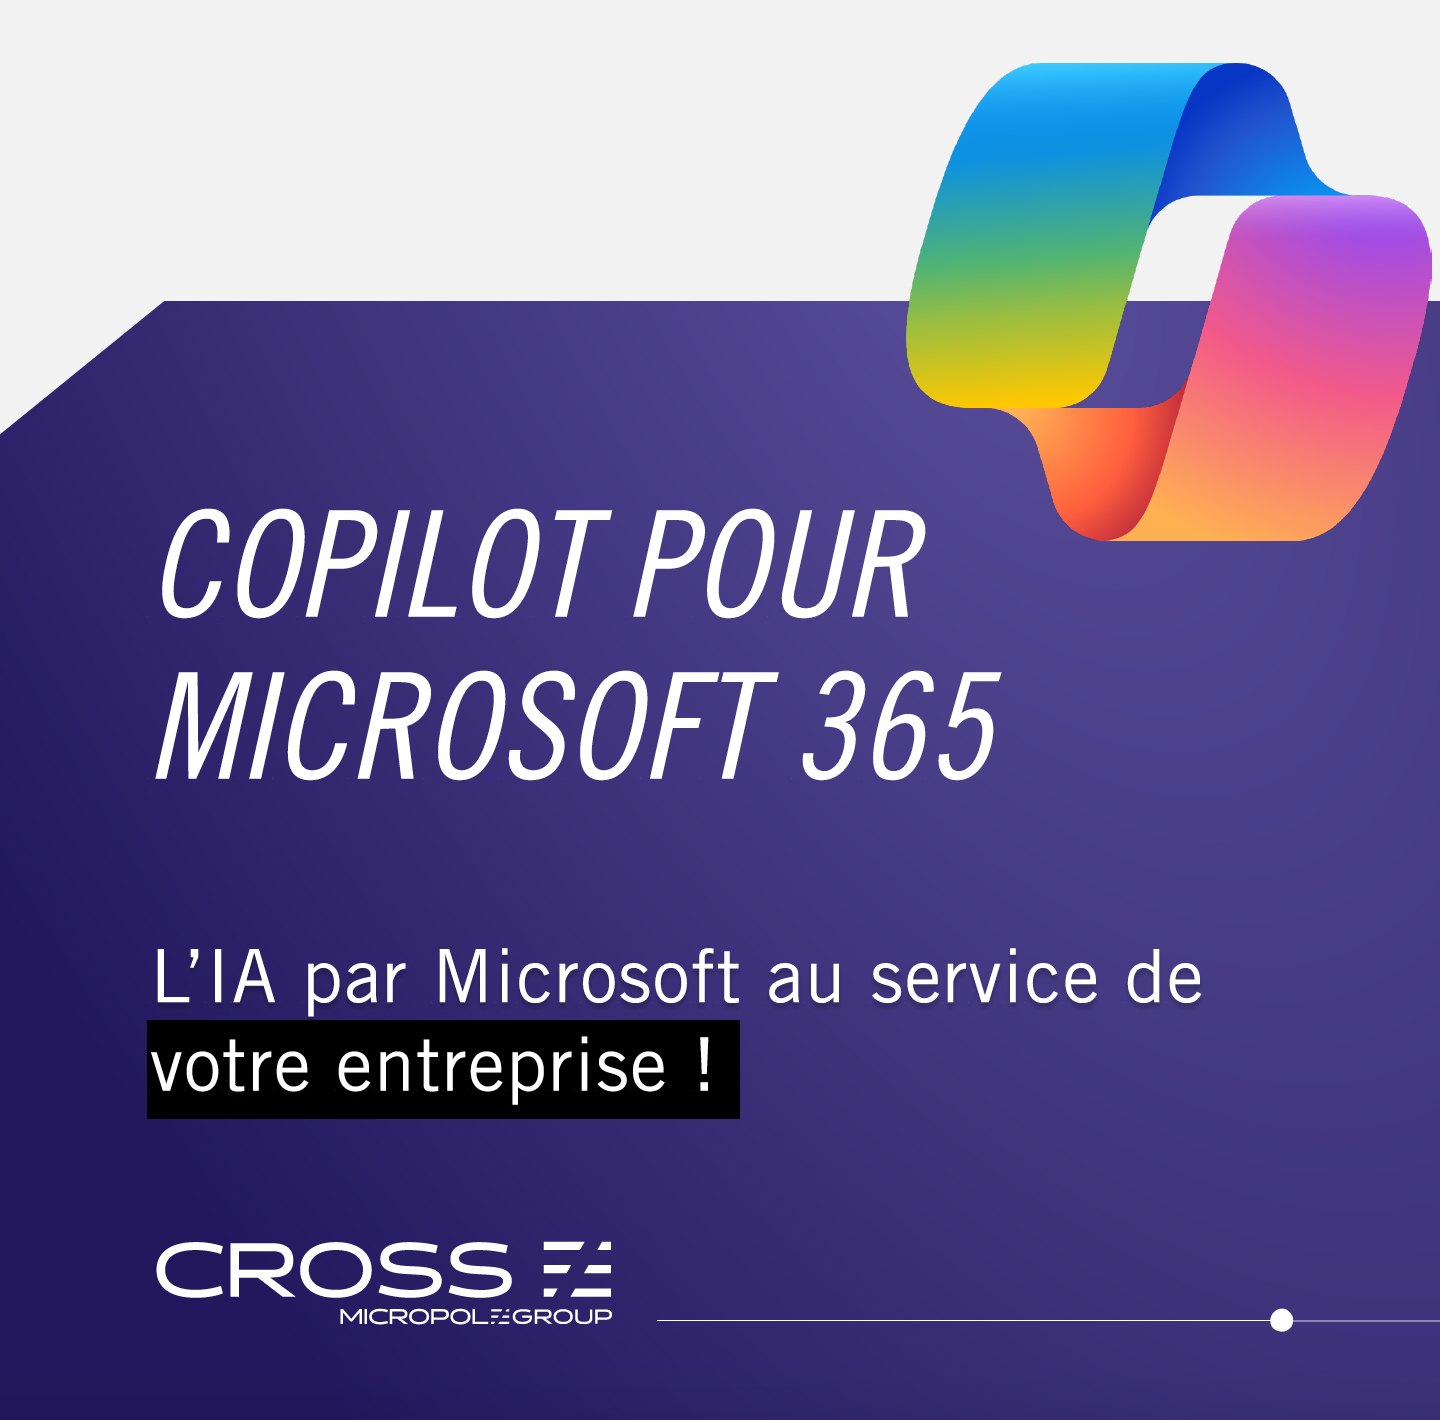 Adopt Copilot for Microsoft 365!